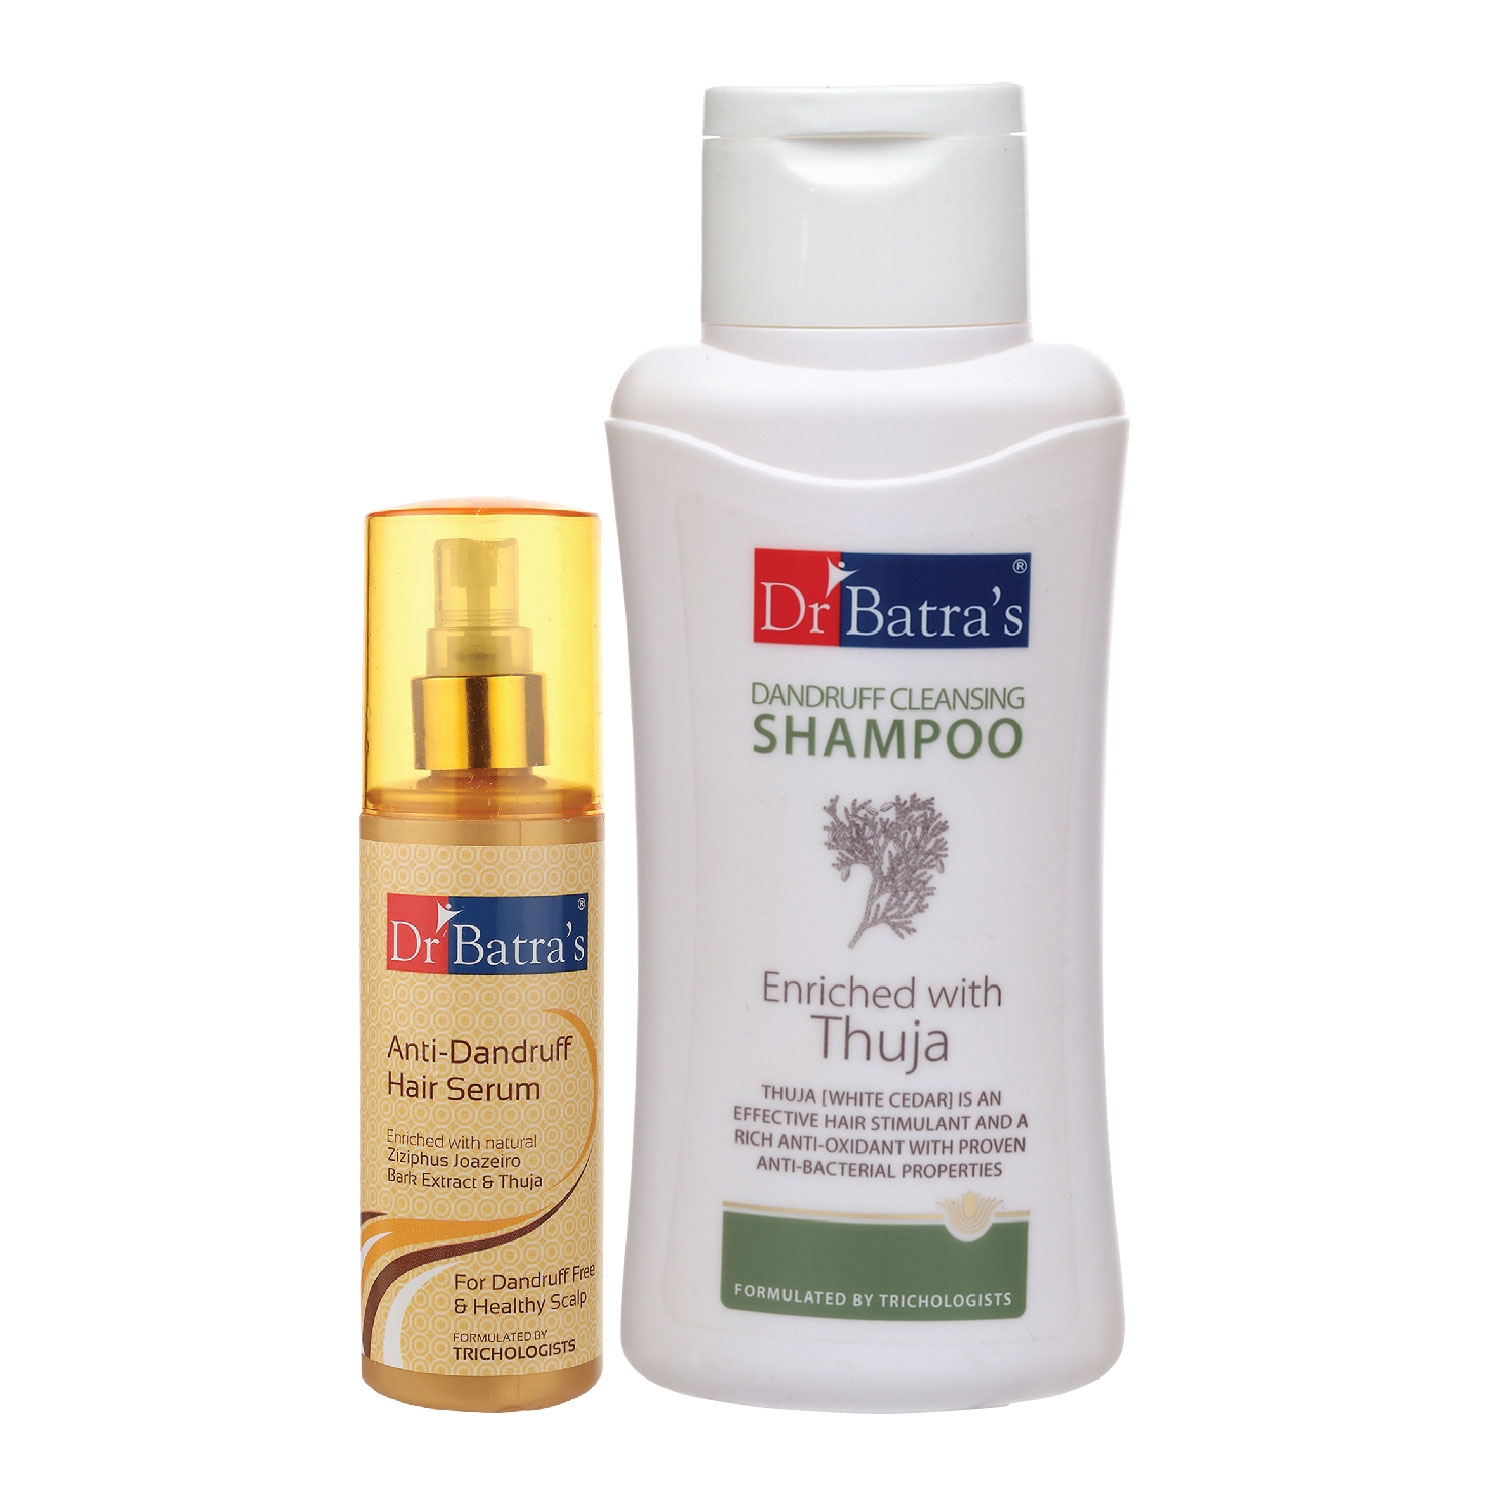 Dr Batra's | Dr Batra's Anti Dandruff Hair Serum and Dandruff Cleansing Shampoo - 500 ml